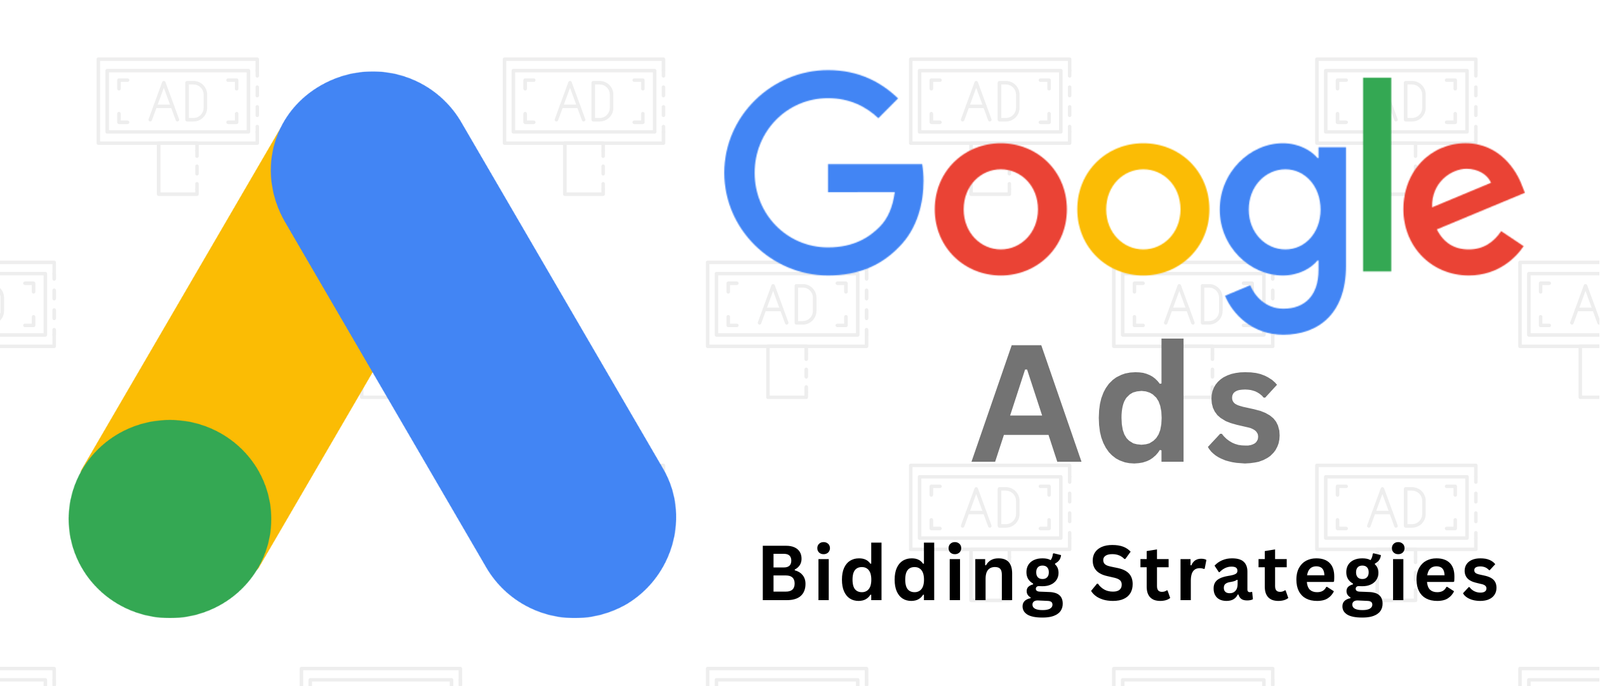 Bidding strategies in Google Ads